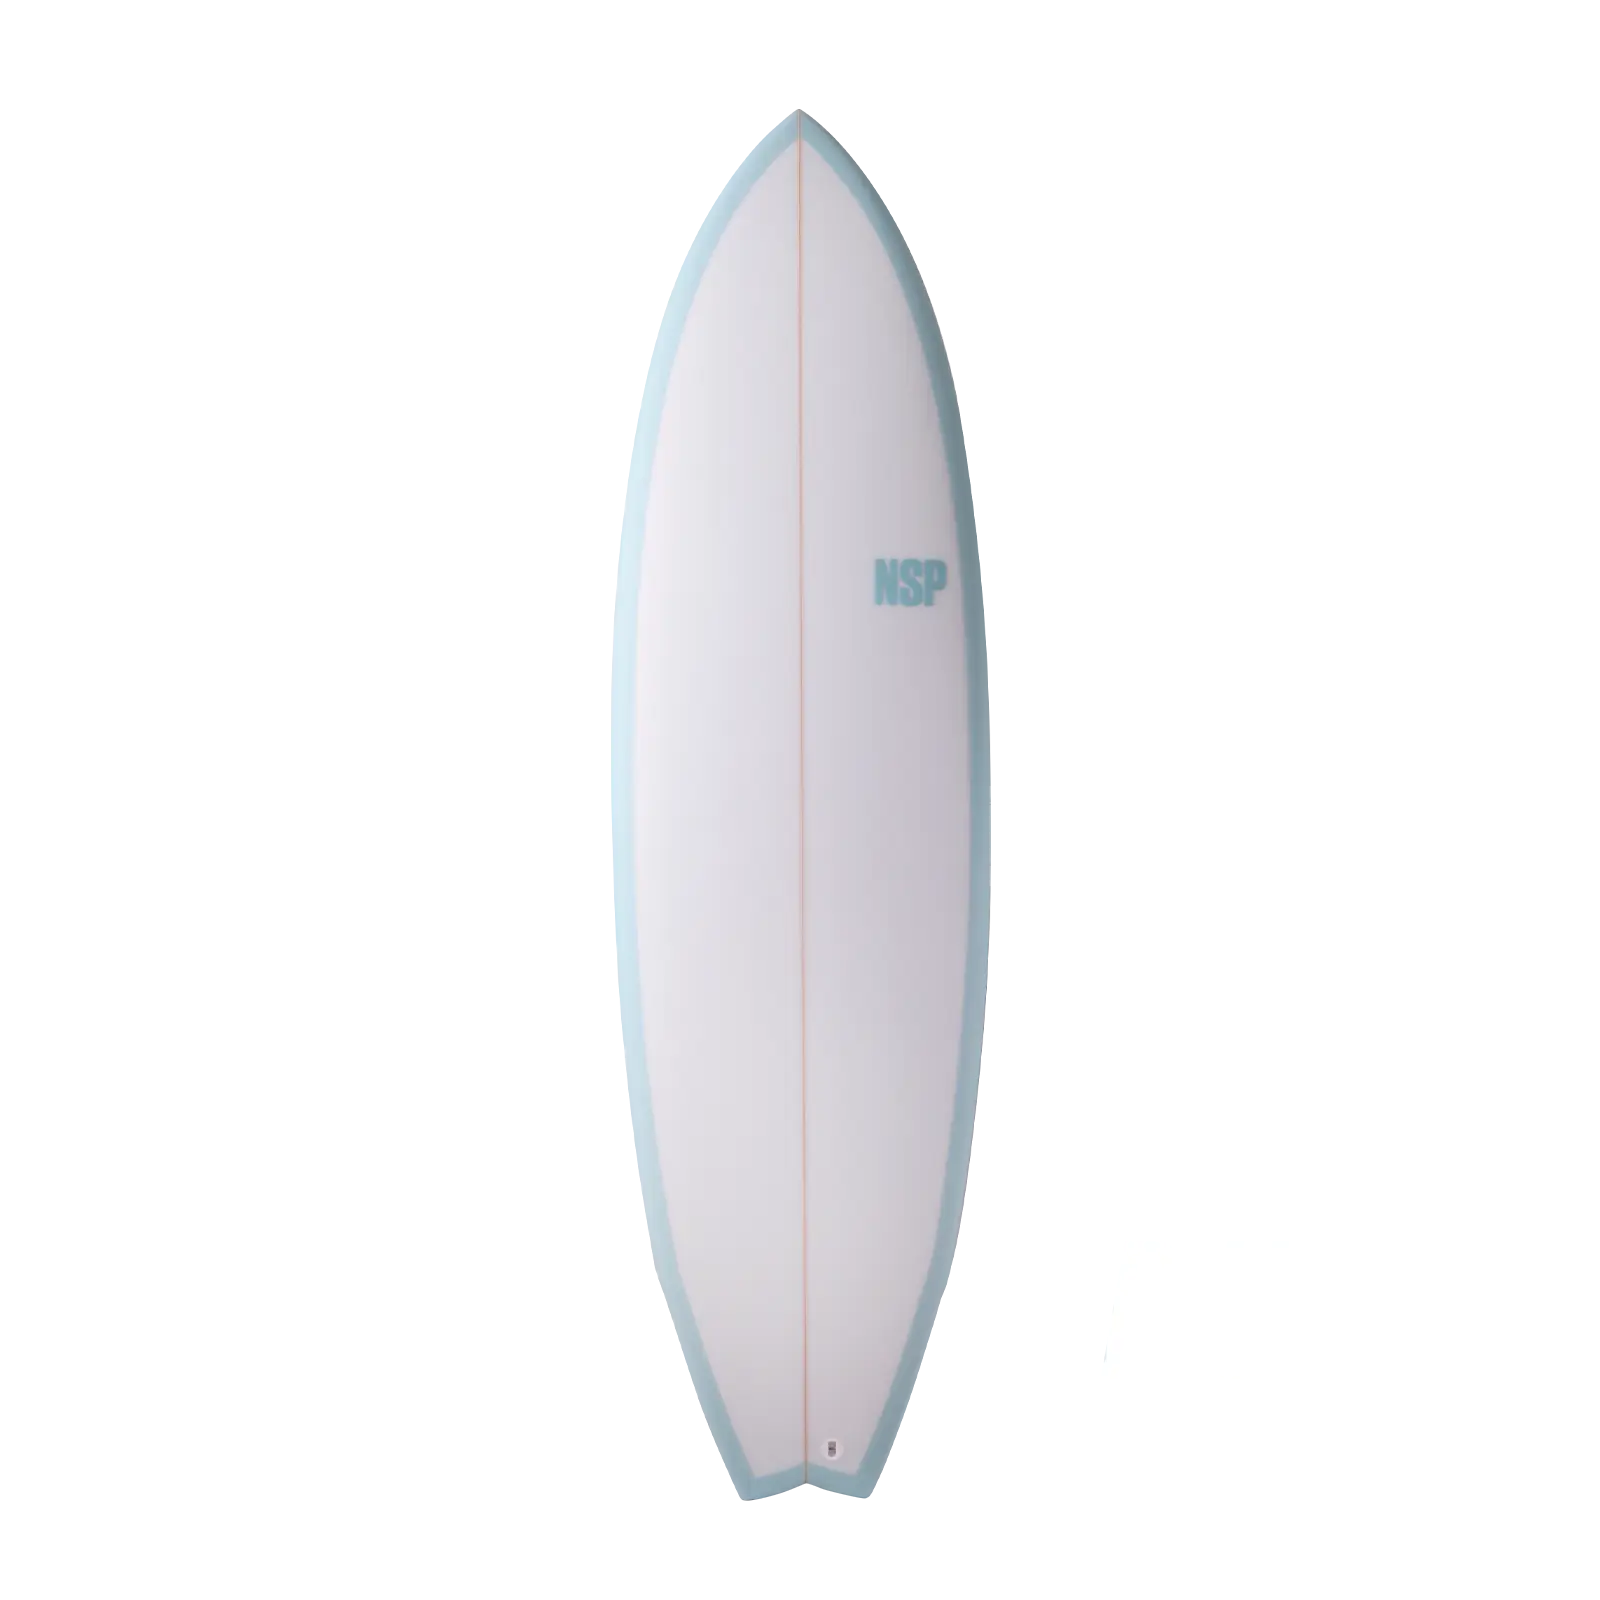 Kingfish Surfboards NSP 5'6" | 28.1 L 